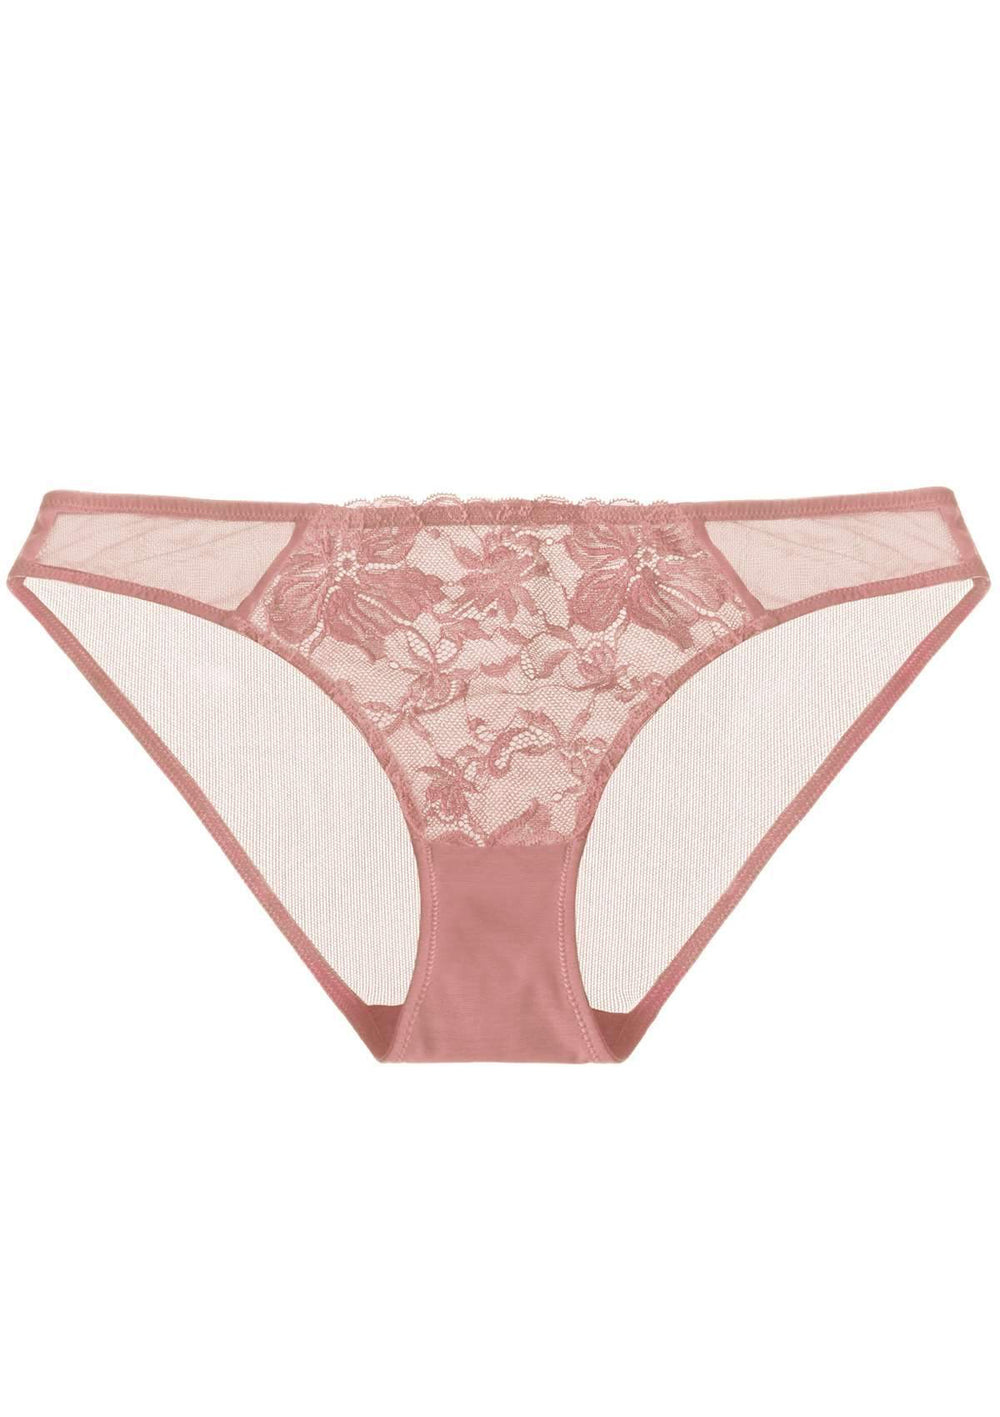 HSIA Pretty In Petals Sexy Everyday Lace Underwear